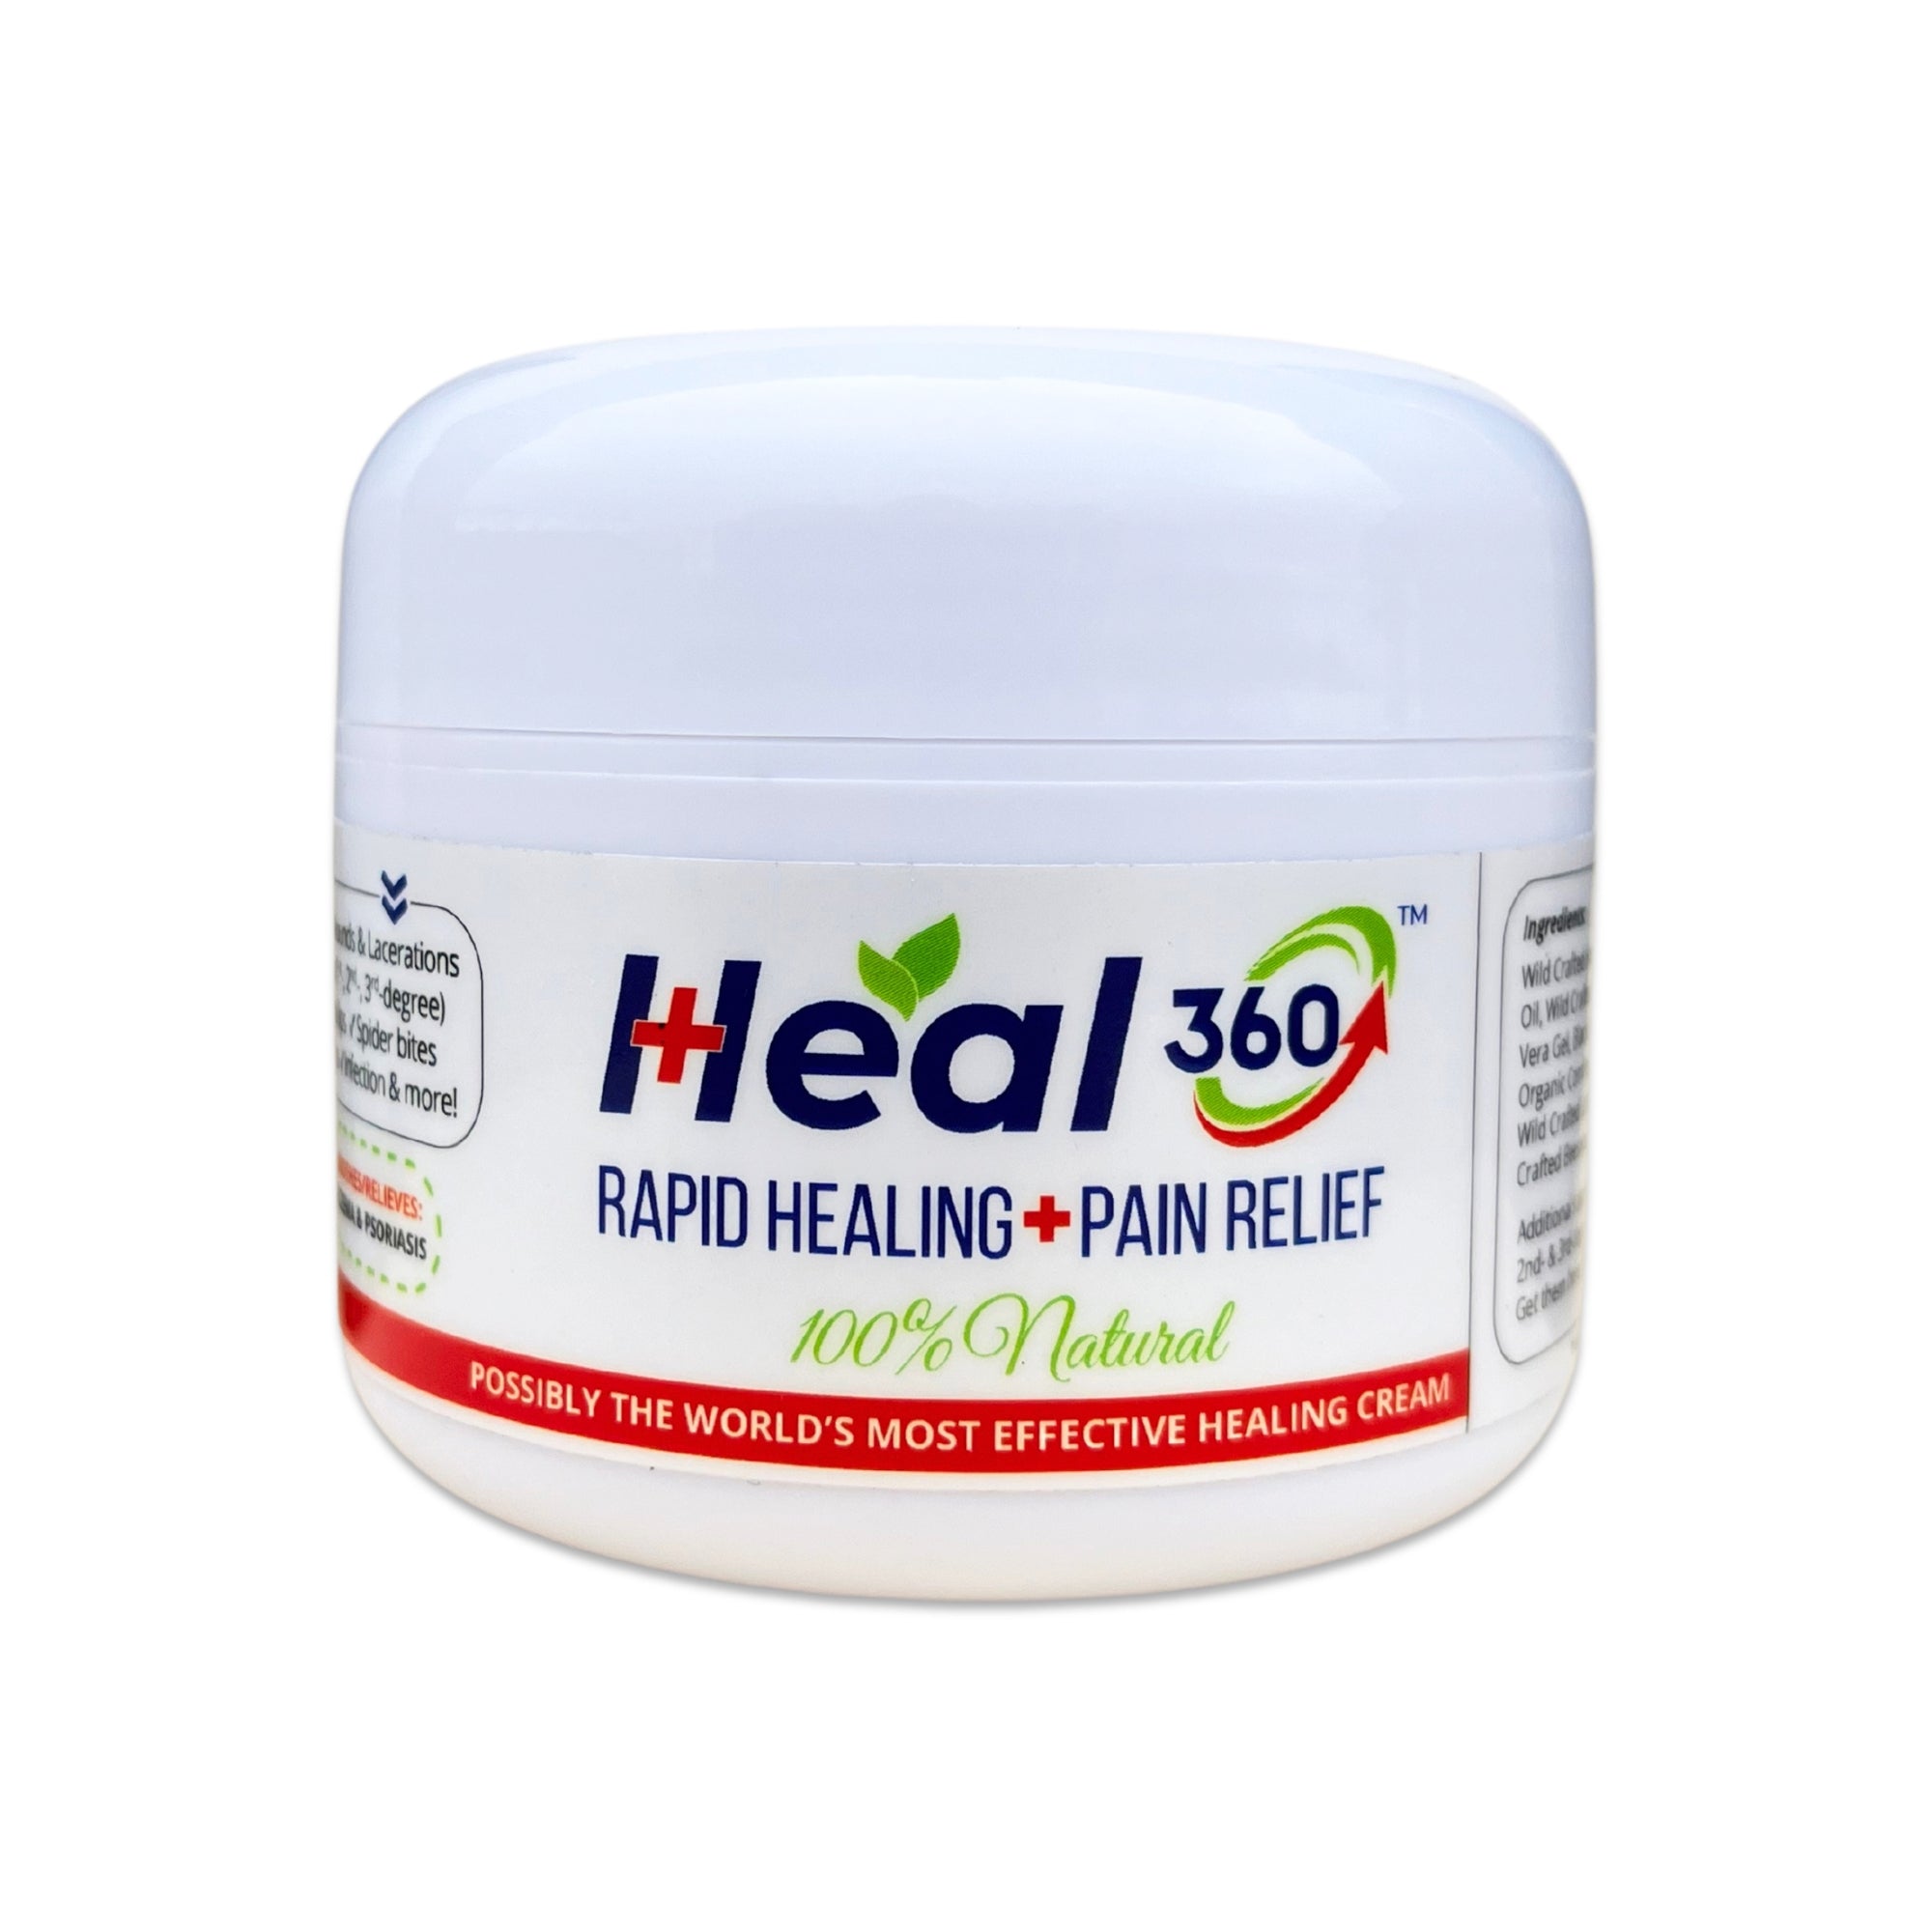 Heal360 Natural Healing Ointment